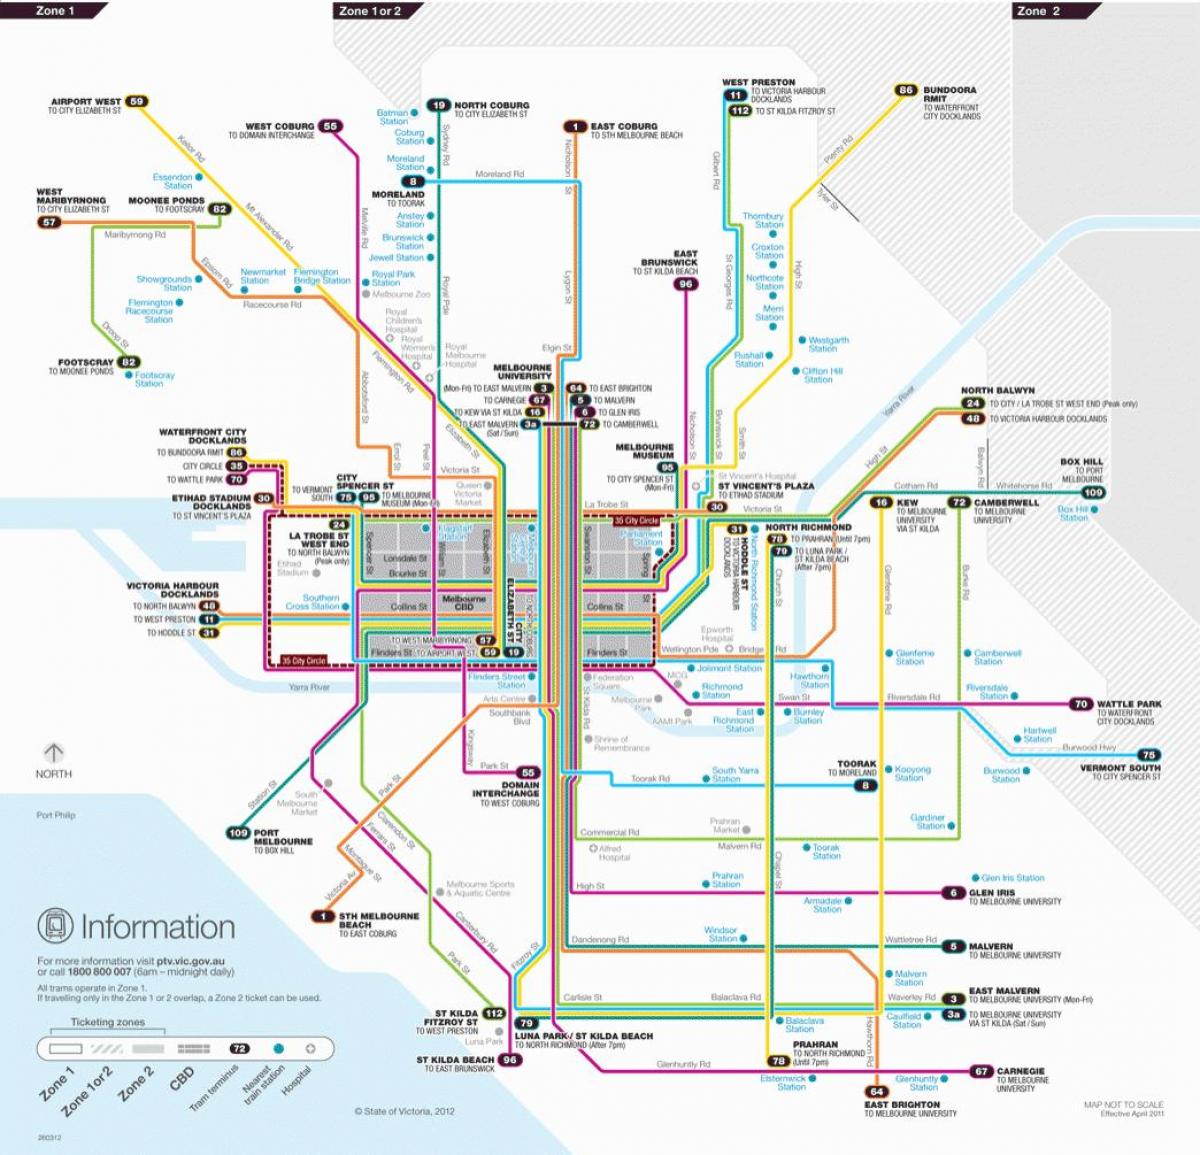 Melbourne tramvay marşrut xəritəsi